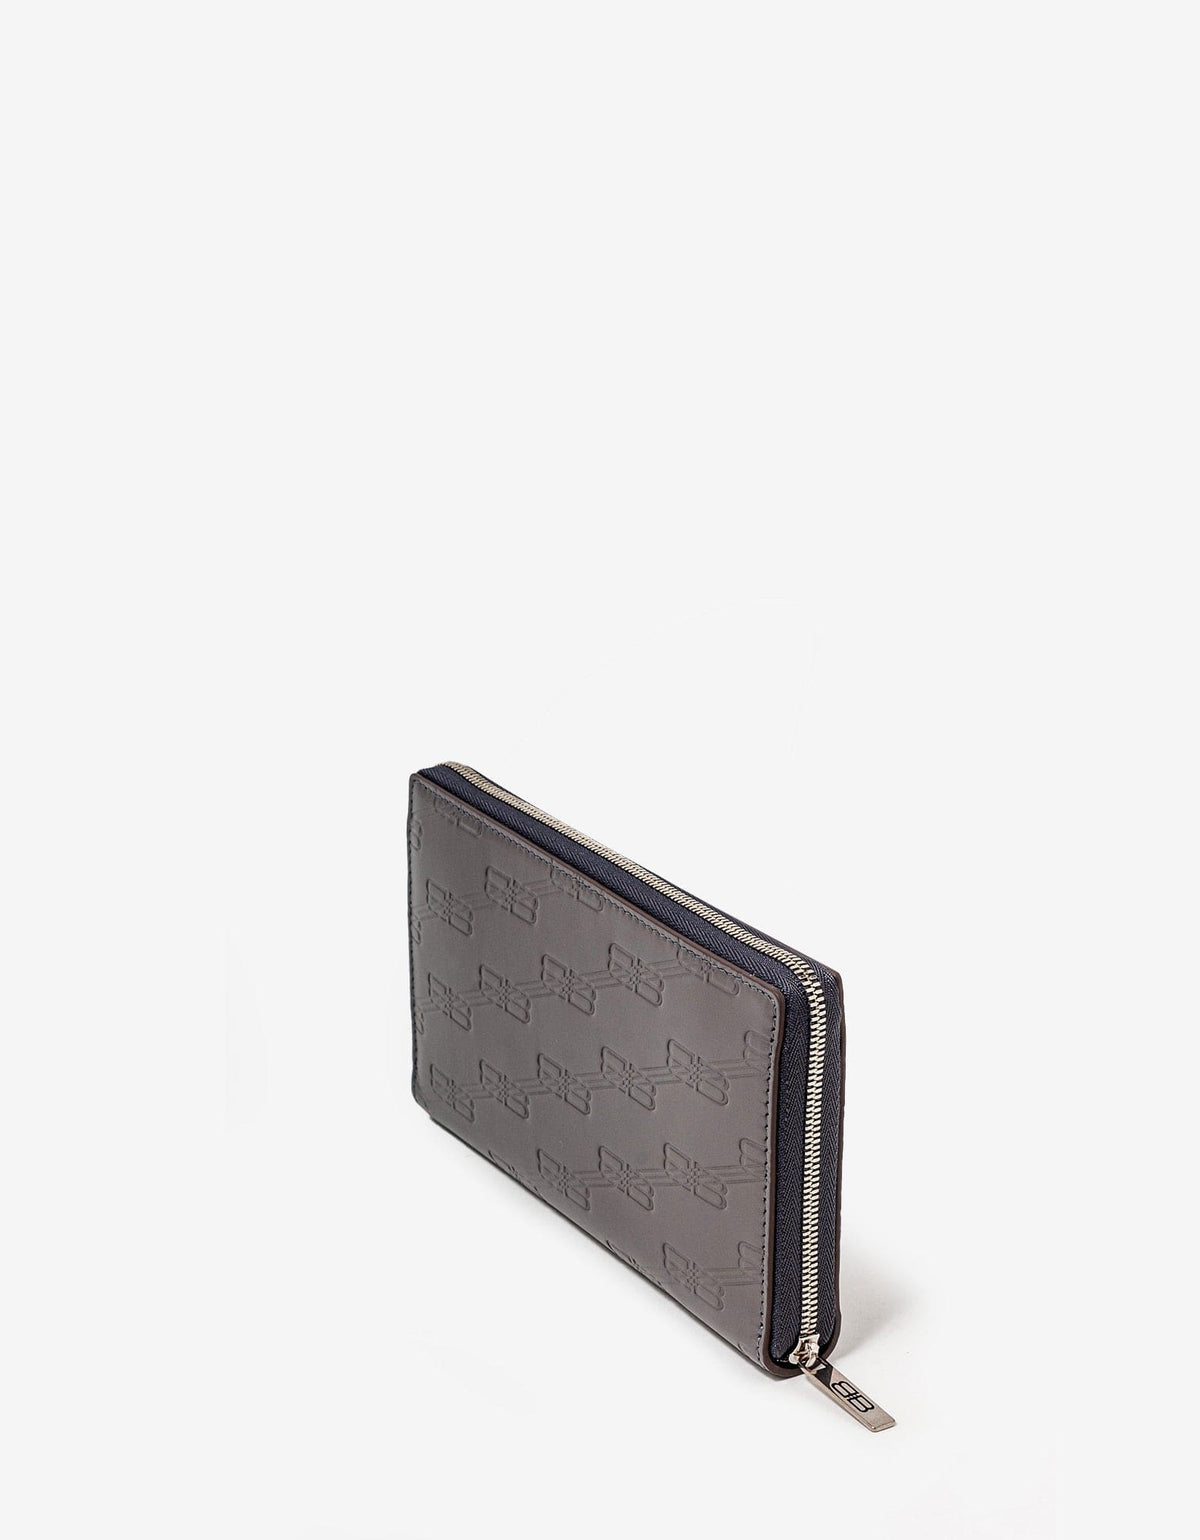 Balenciaga Dark Grey BB Monogram Continental Wallet